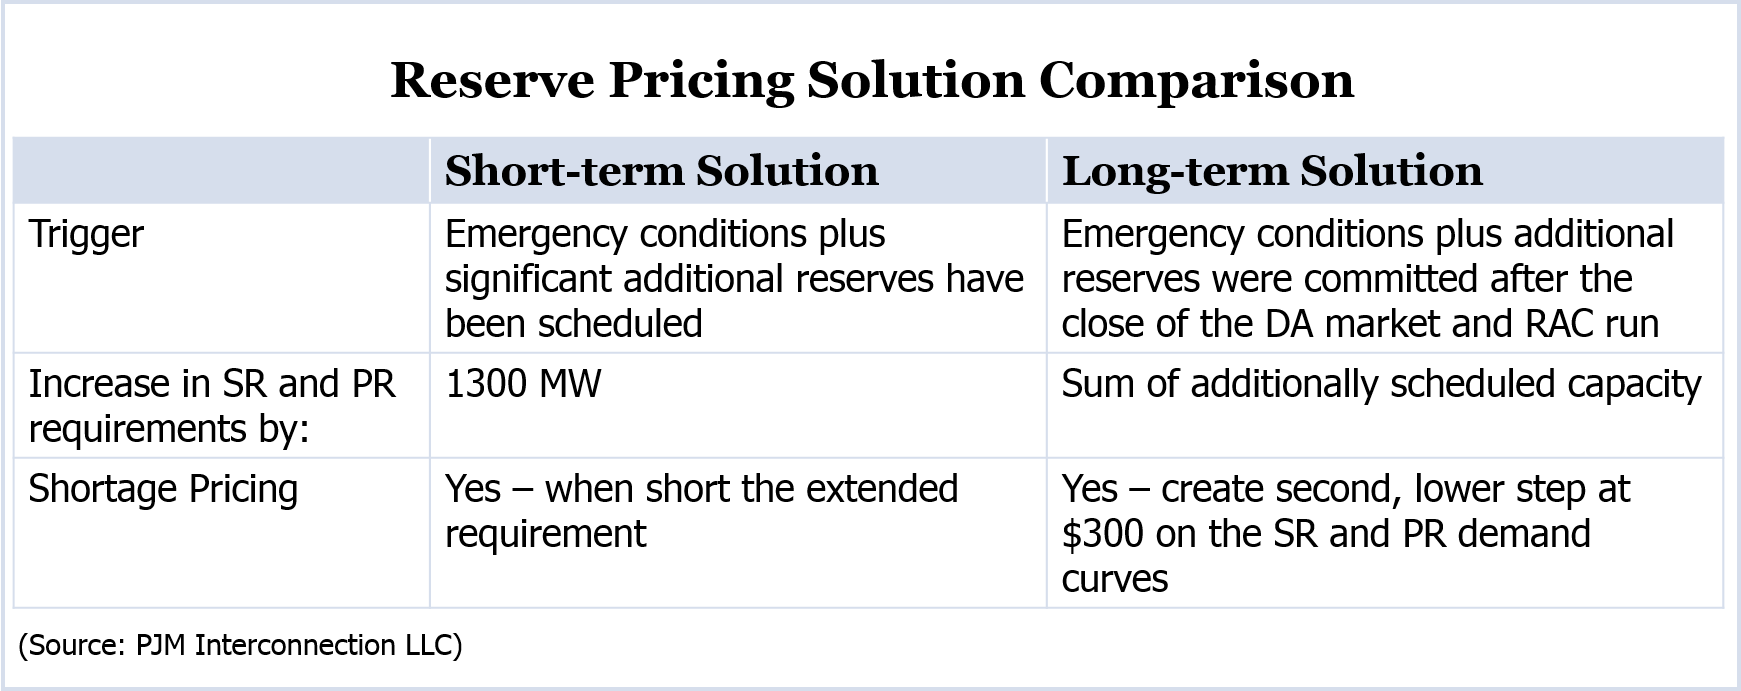 Reserve Pricing Solutions Comparison (Source: PJM Interconnection LLC)